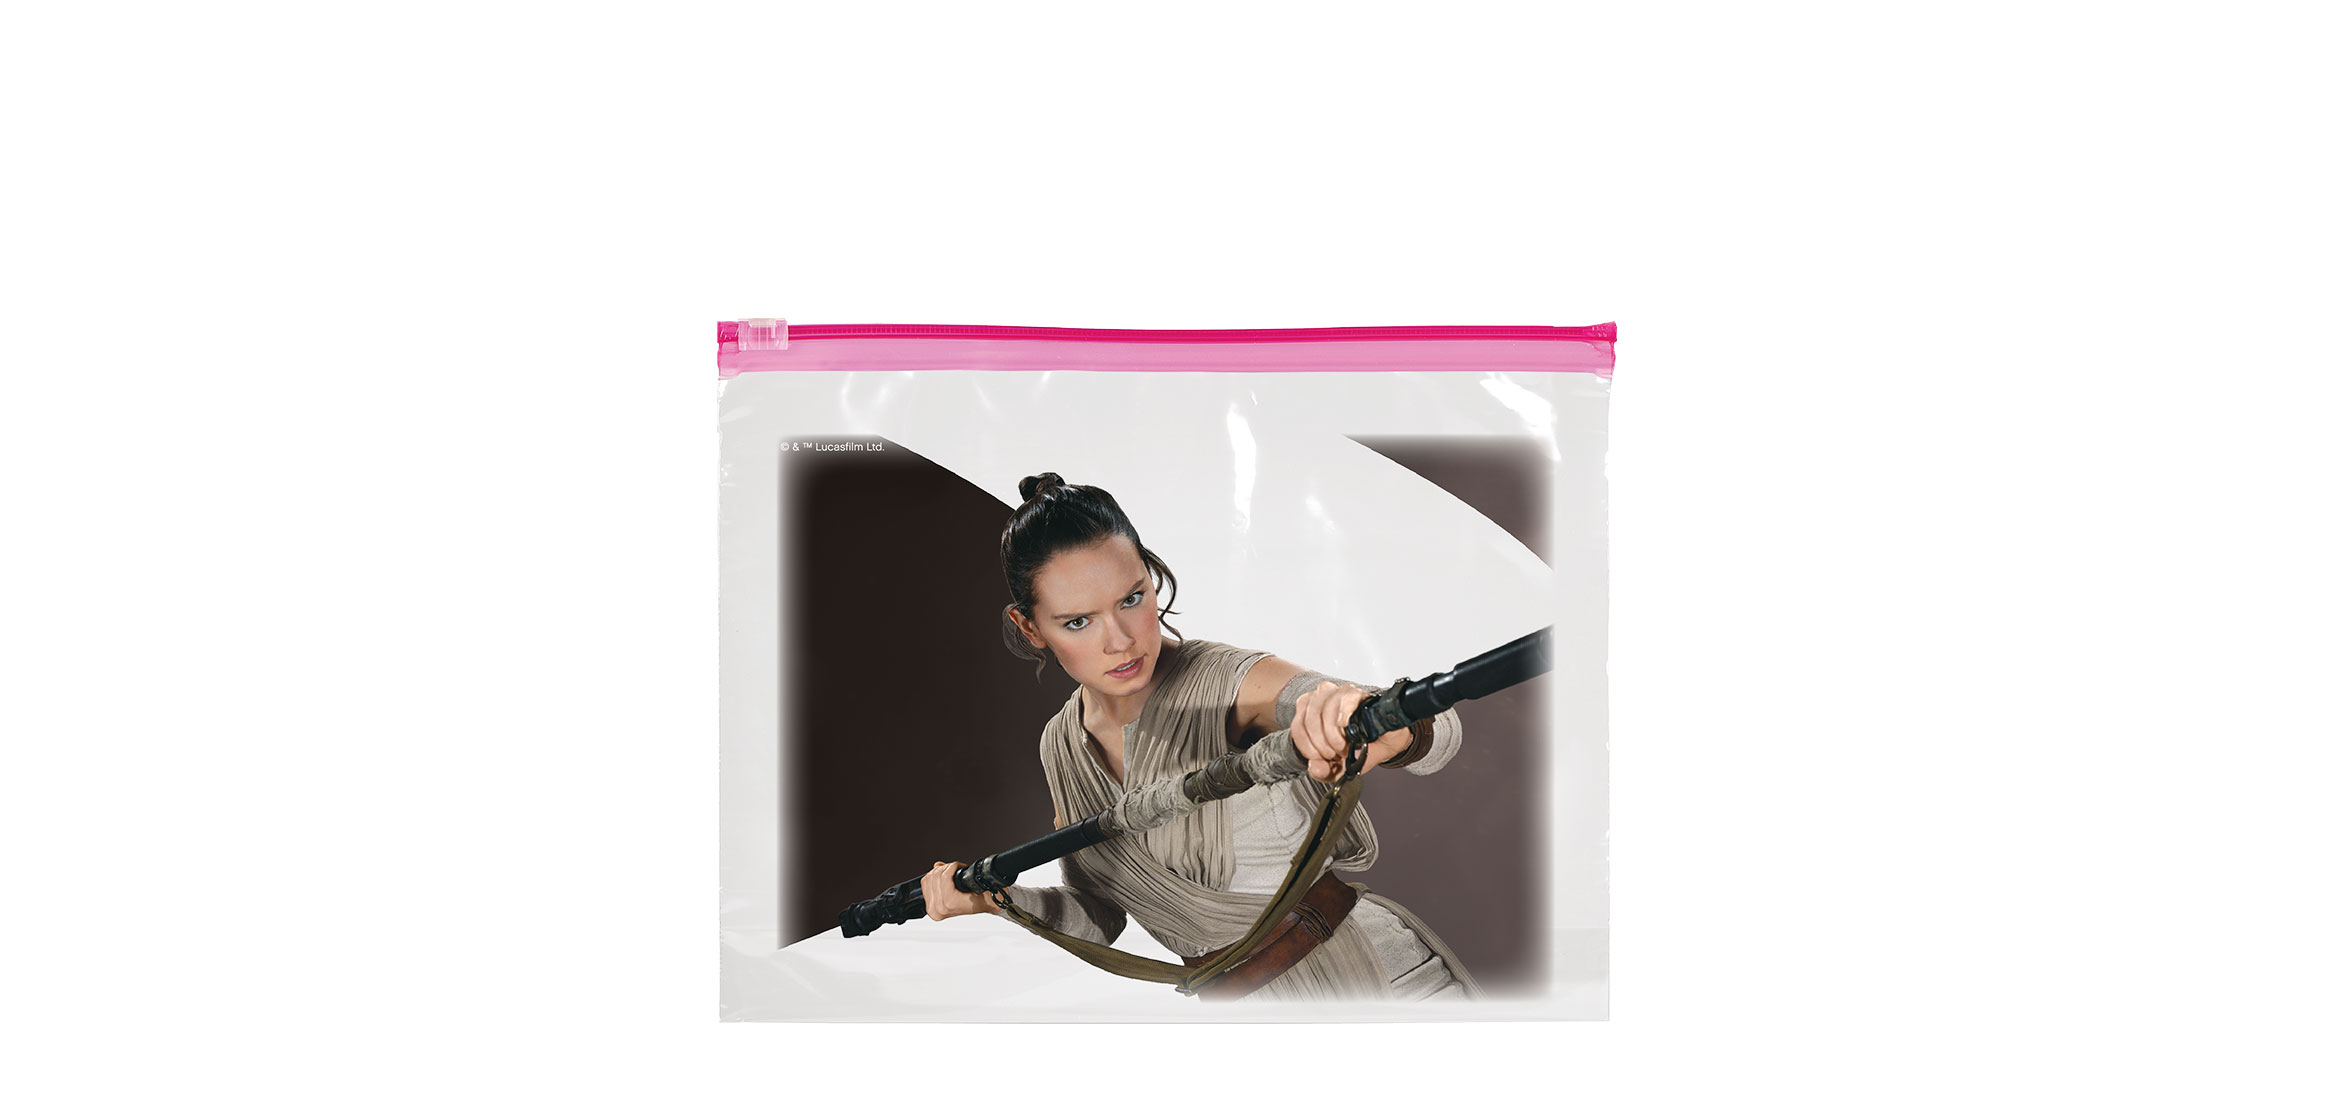 Ziploc®, Star Wars Slider Storage Bag/ Quart, Ziploc® brand